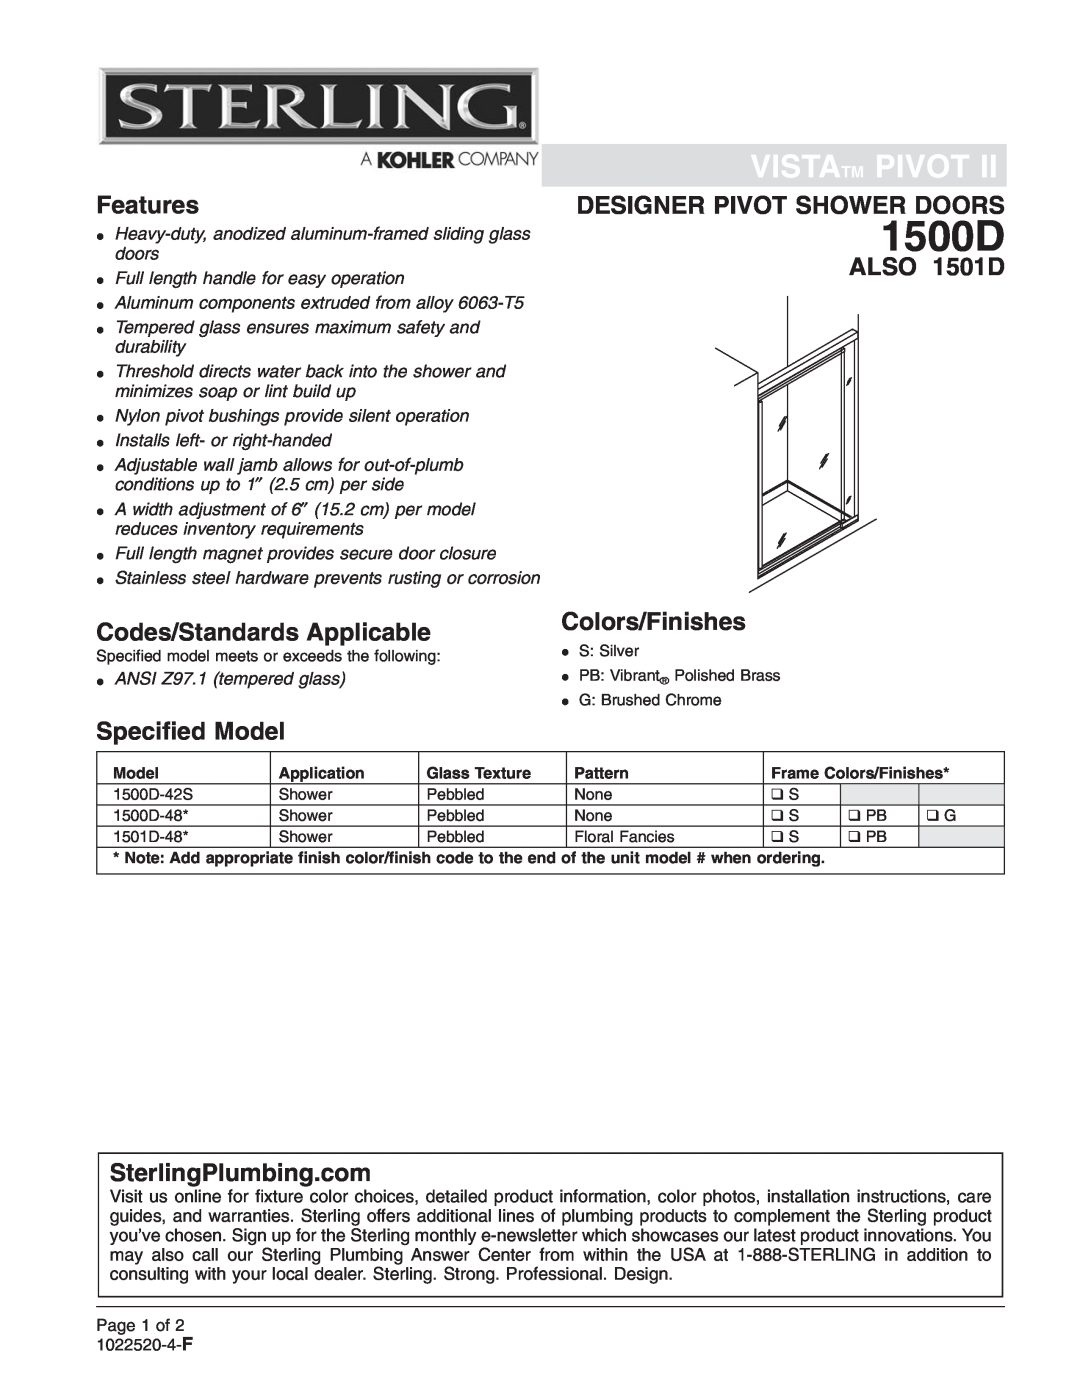 Sterling Plumbing 1500D installation instructions Vistatm Pivot, Features, Designer Pivot Shower Doors, ALSO 1501D 